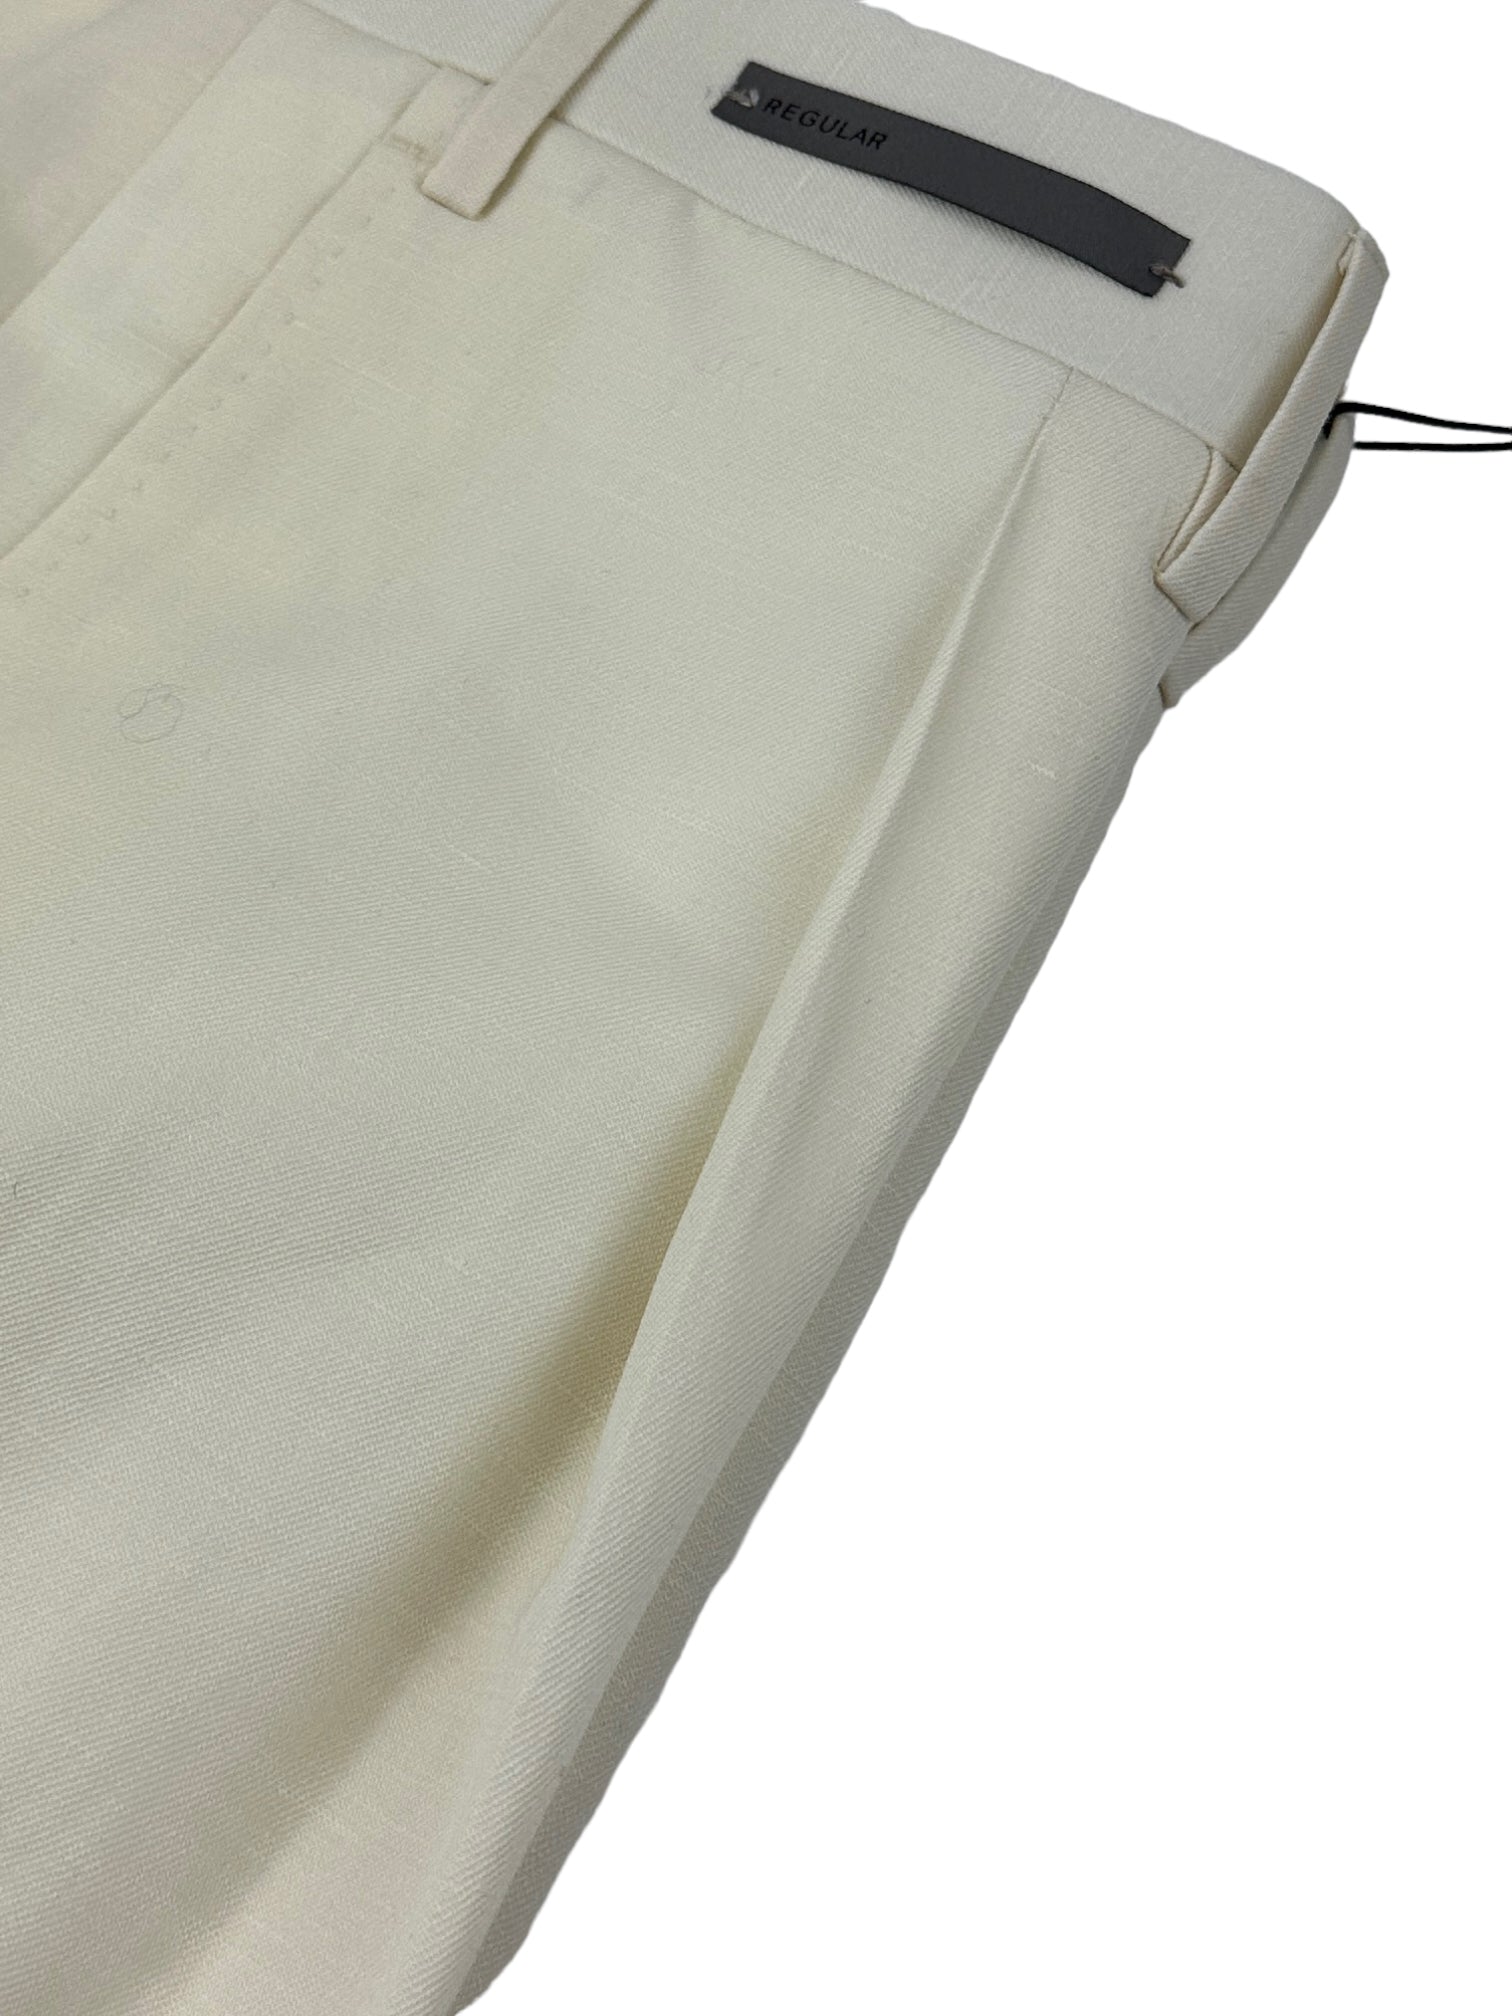 Corneliani Off-White Wool & Linen Pleated Trousers